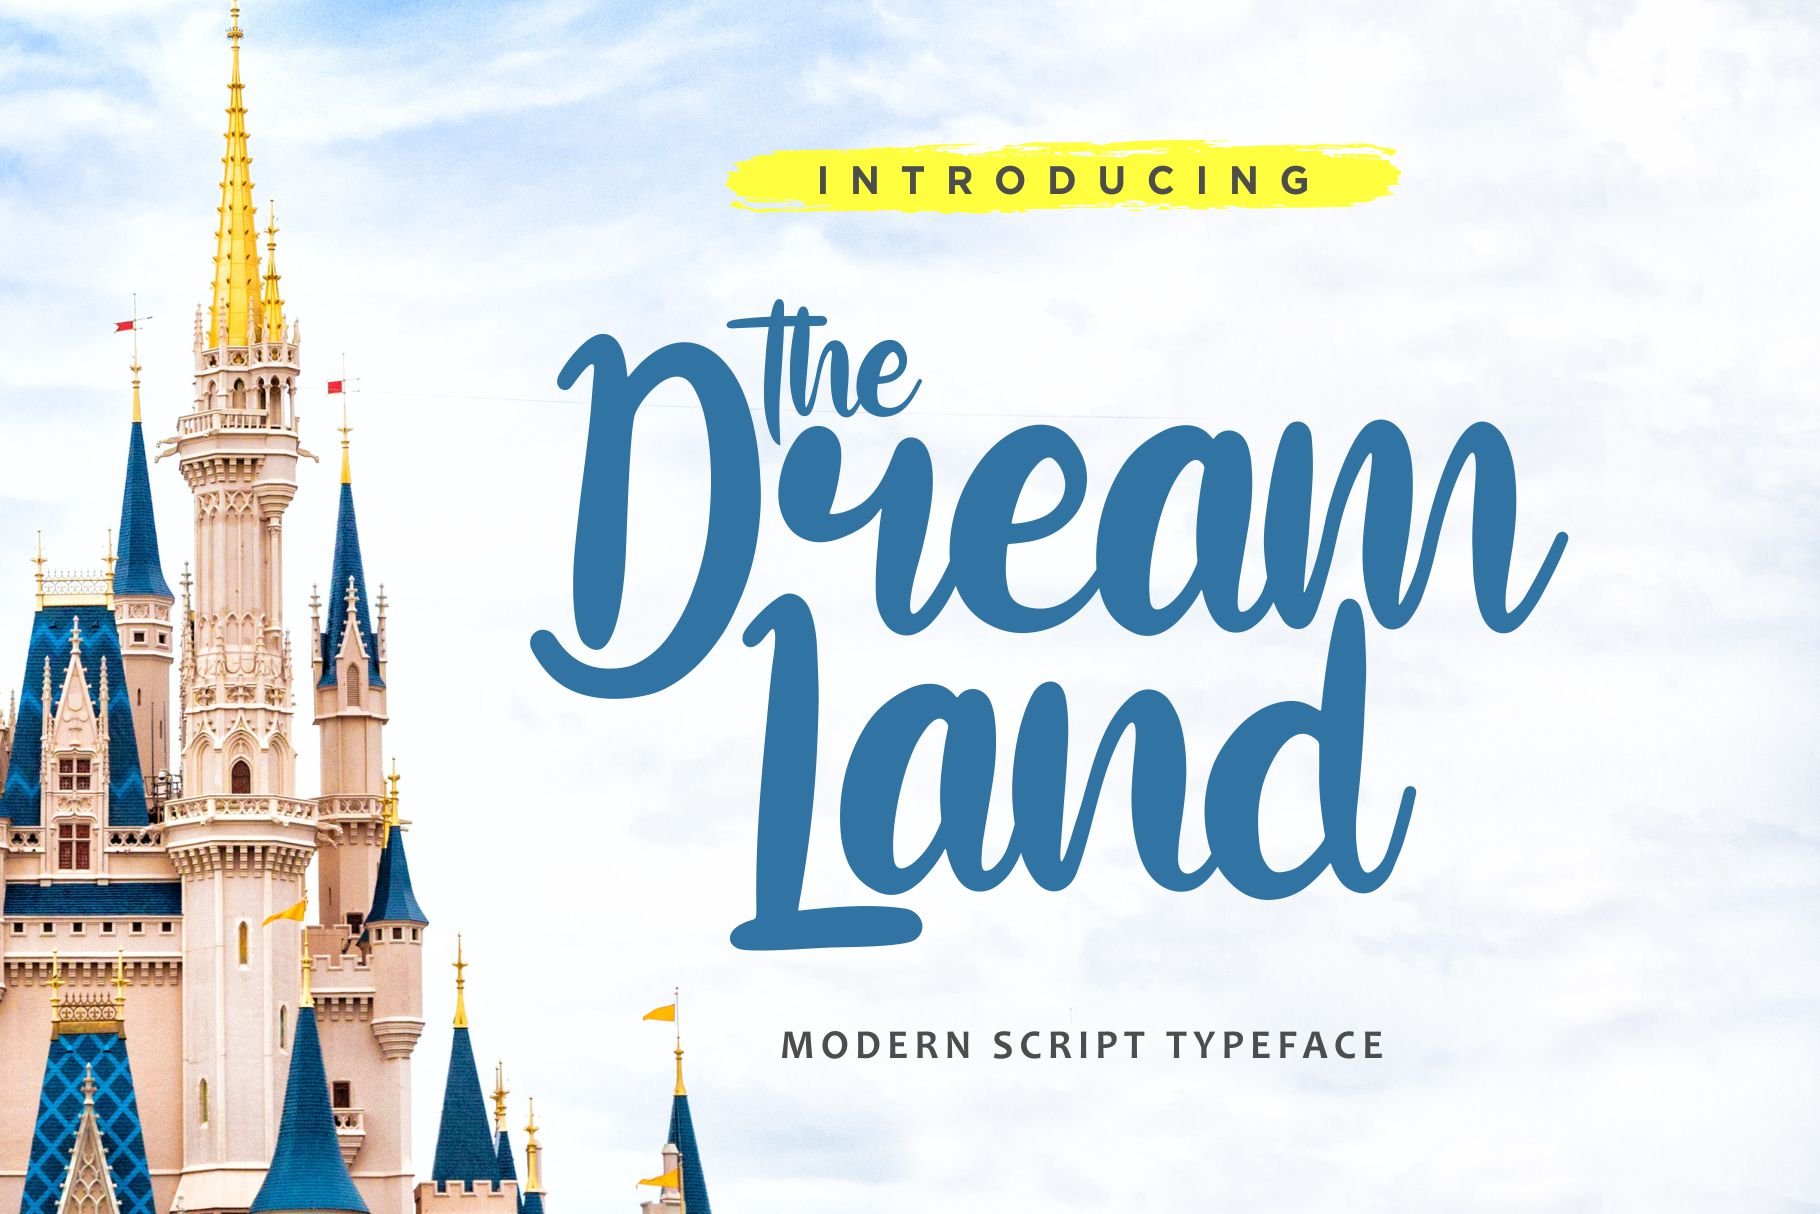 The Dream Land - Modern Script cover image.